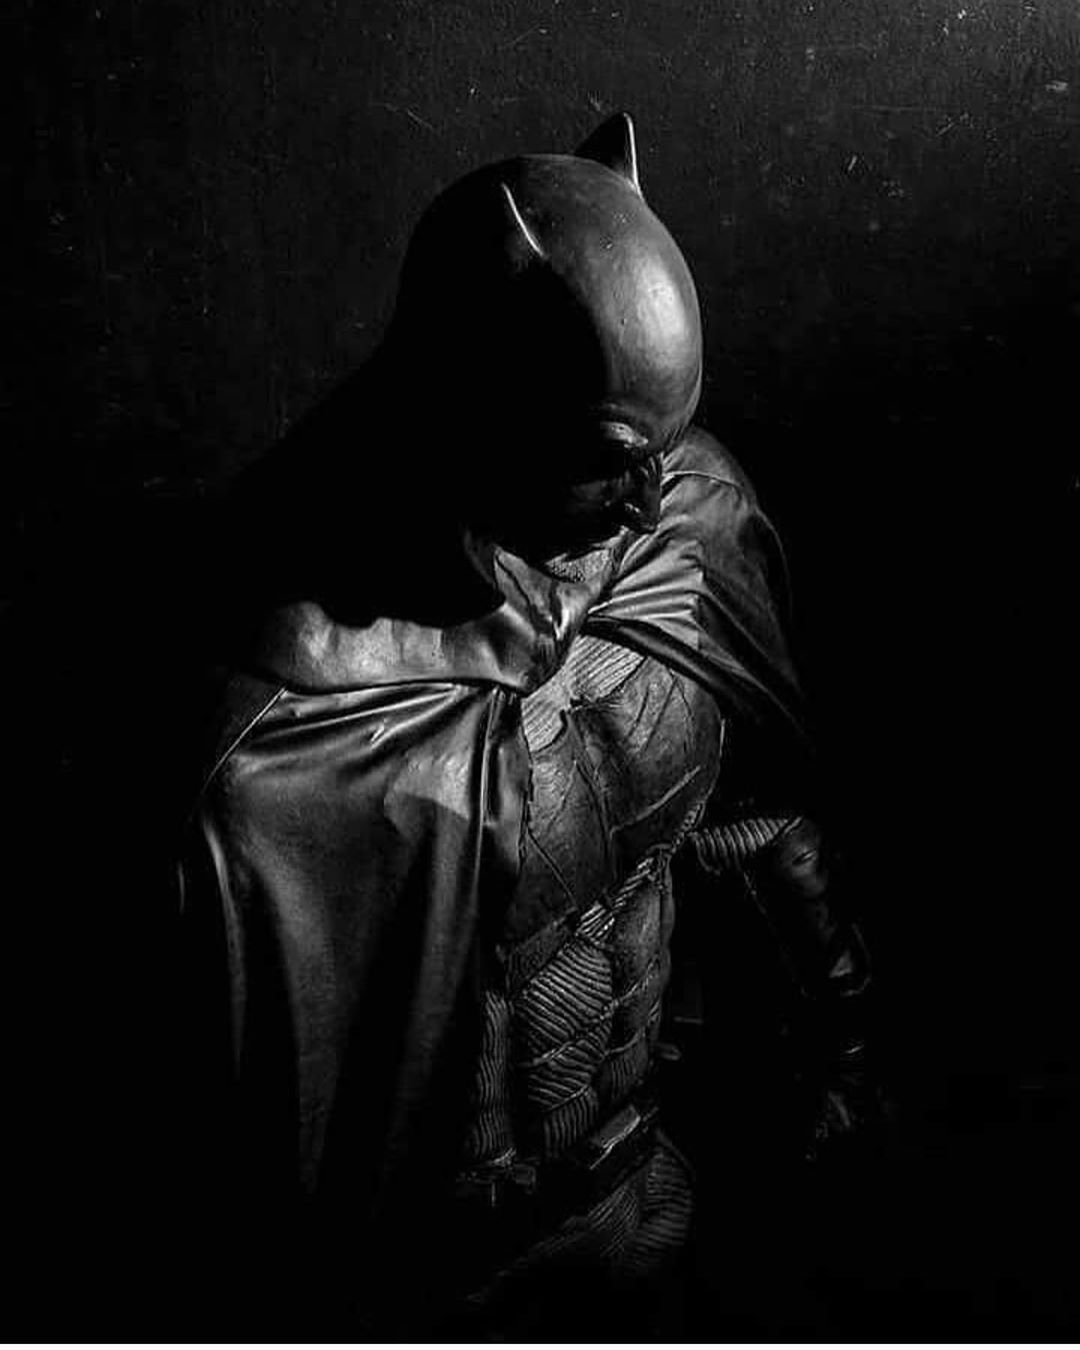 The Batman on Instagram: “The Dark Knight